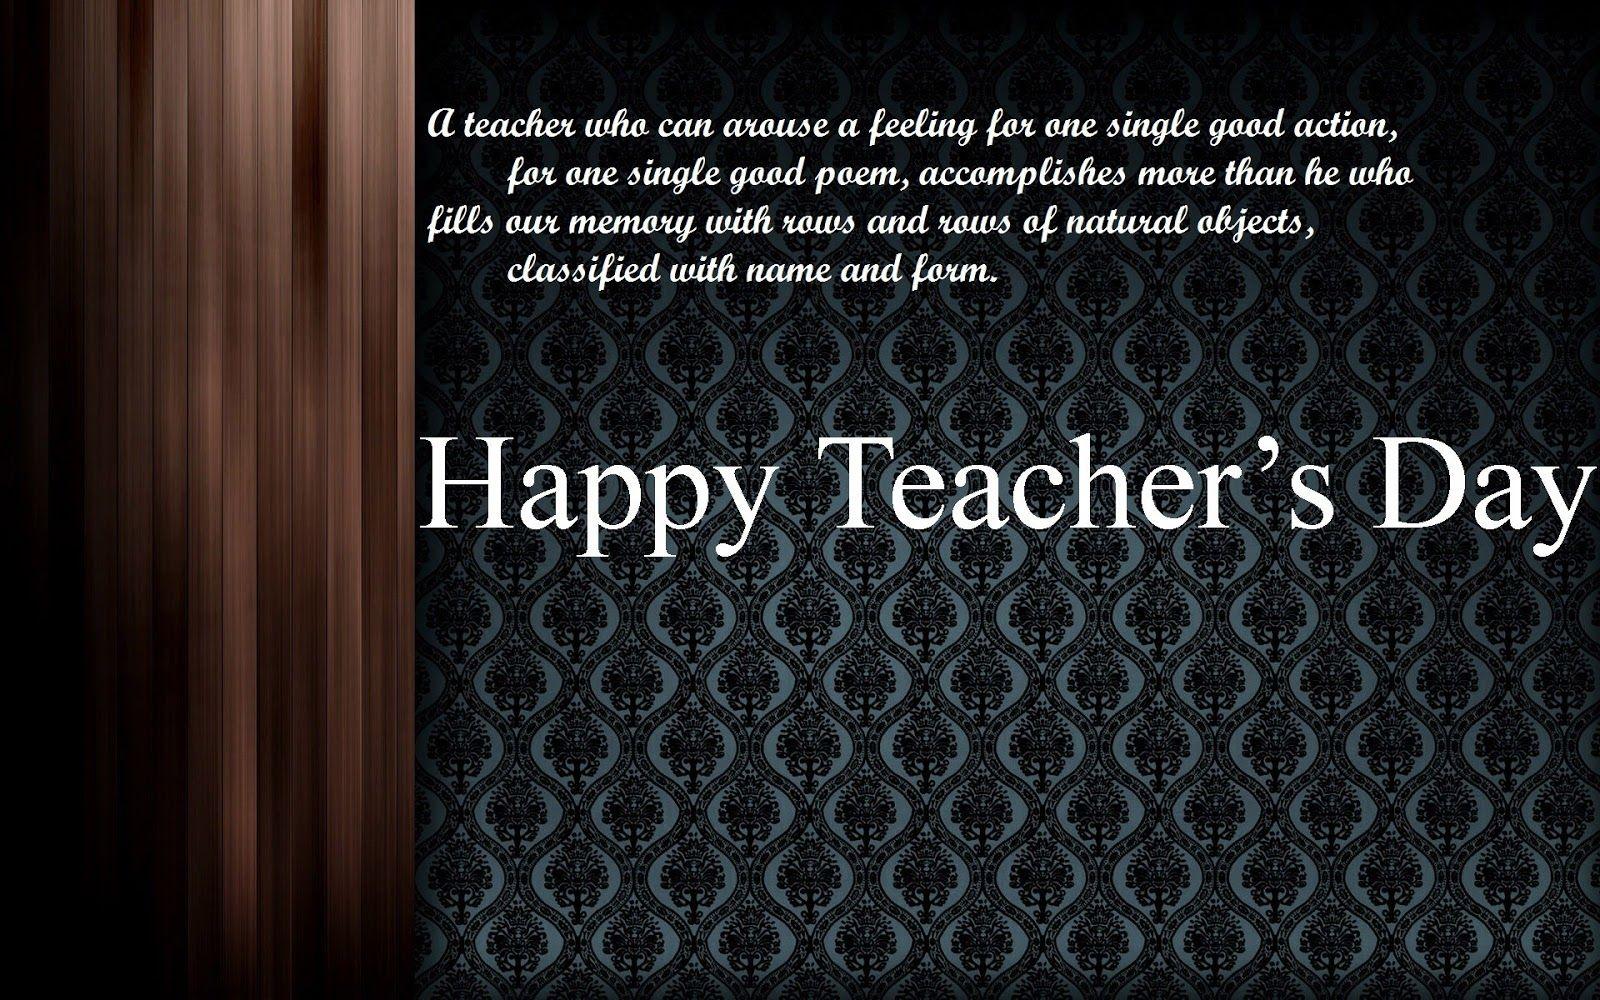 Instagram World: Happy Teachers Day HD Image, Wallpaper, Pics